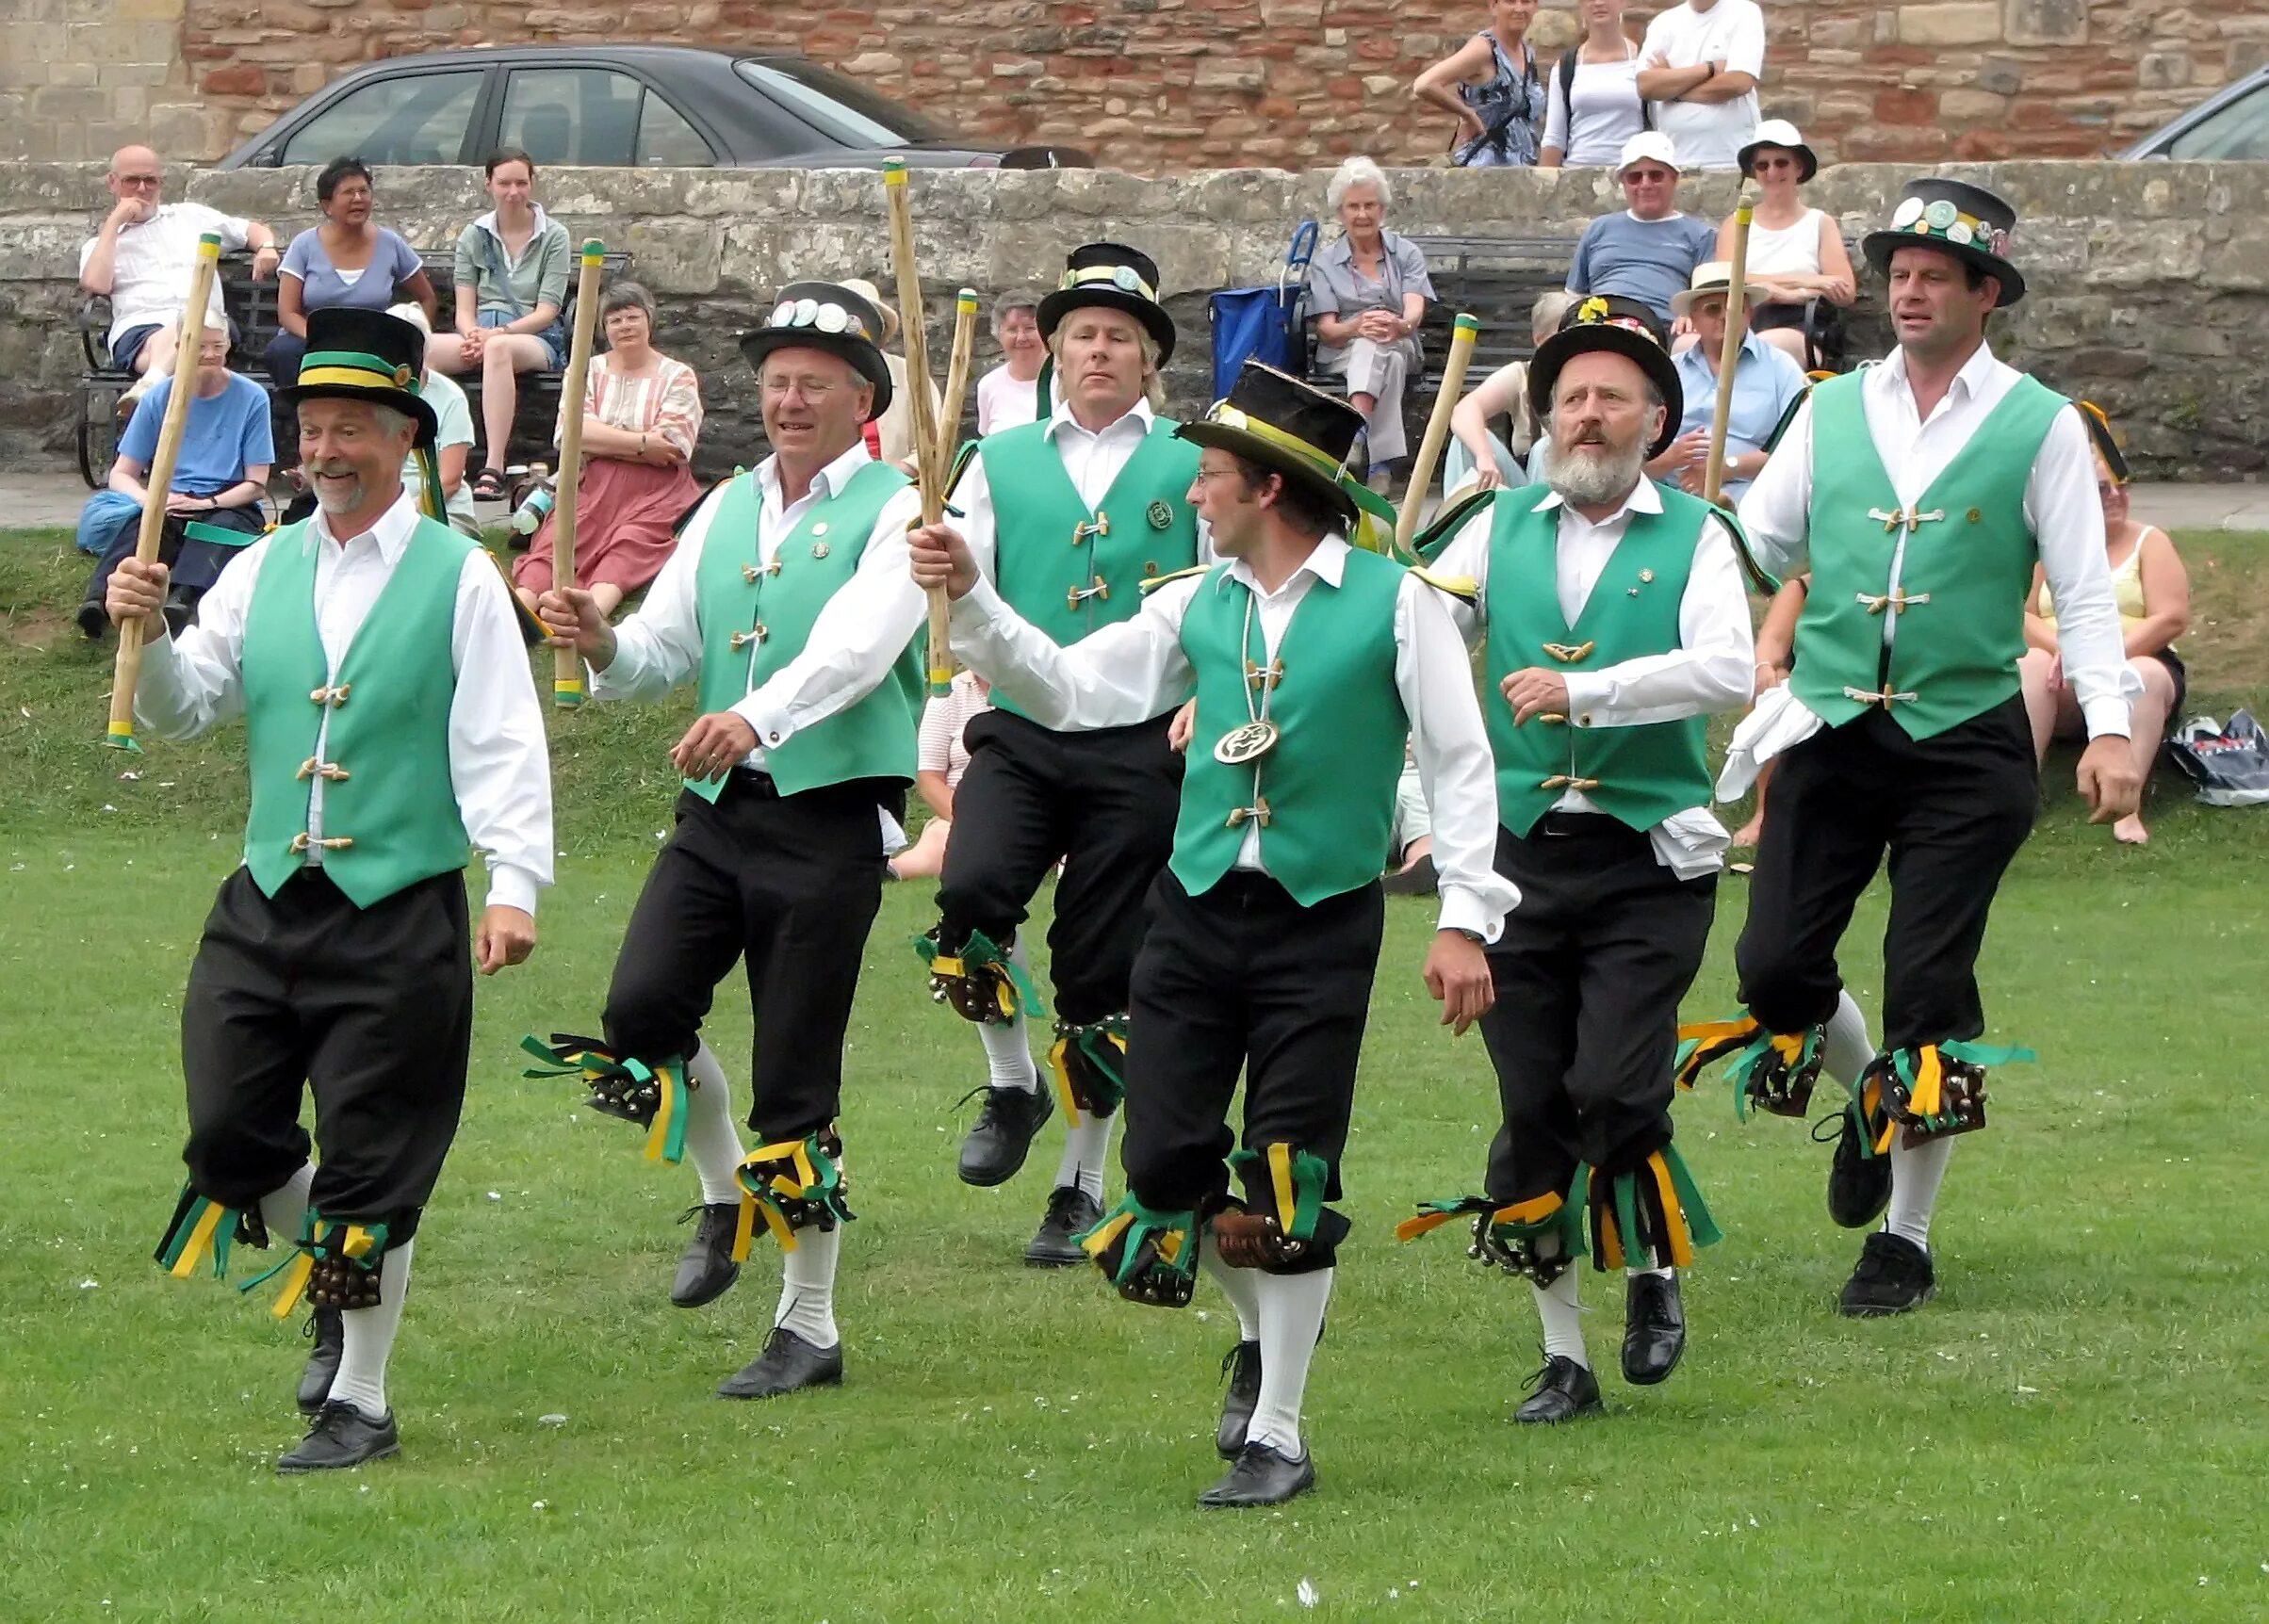 Моррис дансинг Великобритания. Танец англичан Моррис. Моррис танцы в Британии. Morris Dancers в Великобритании. What old irish traditions